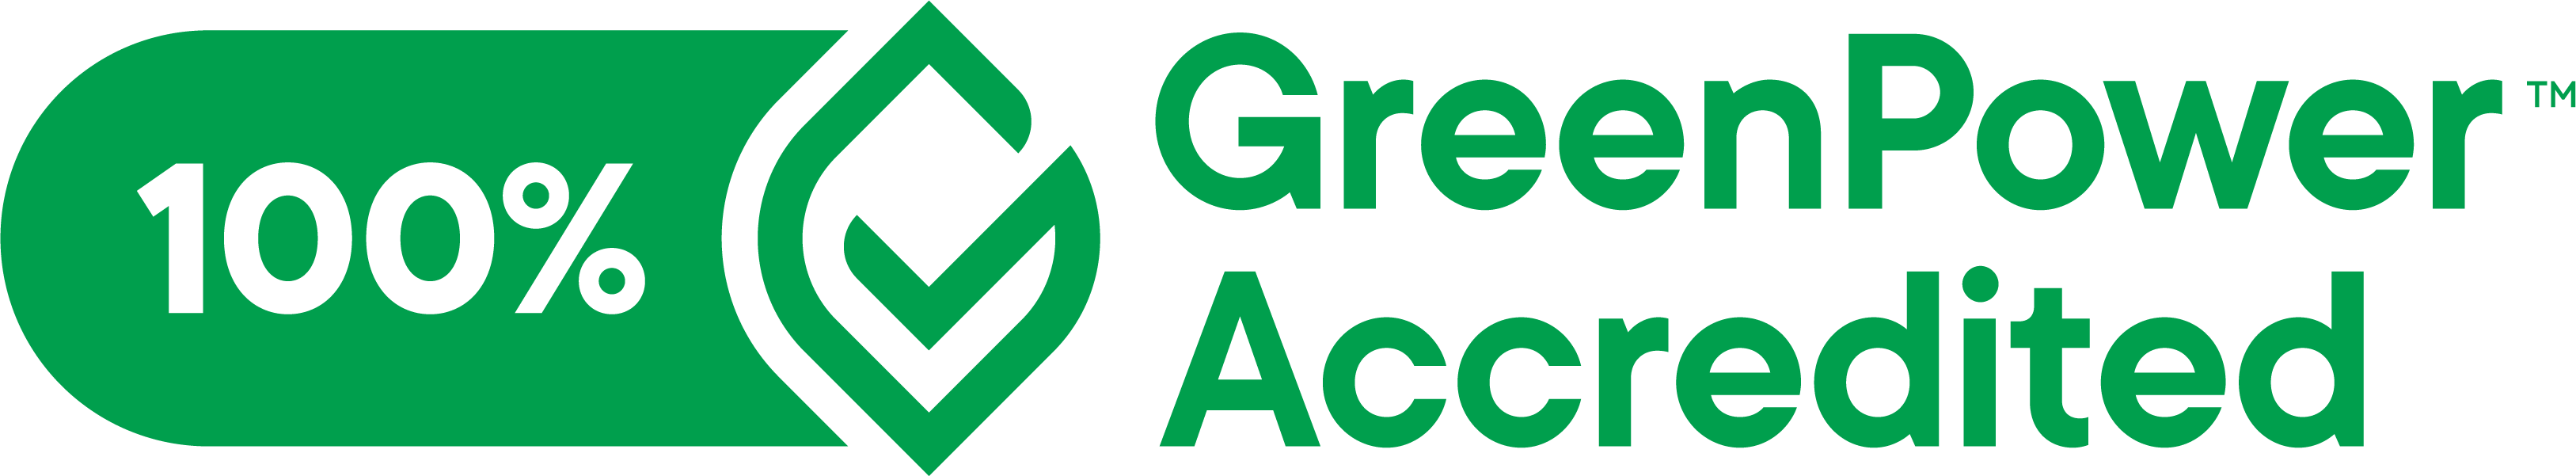 100% GreenPower Accredited logo